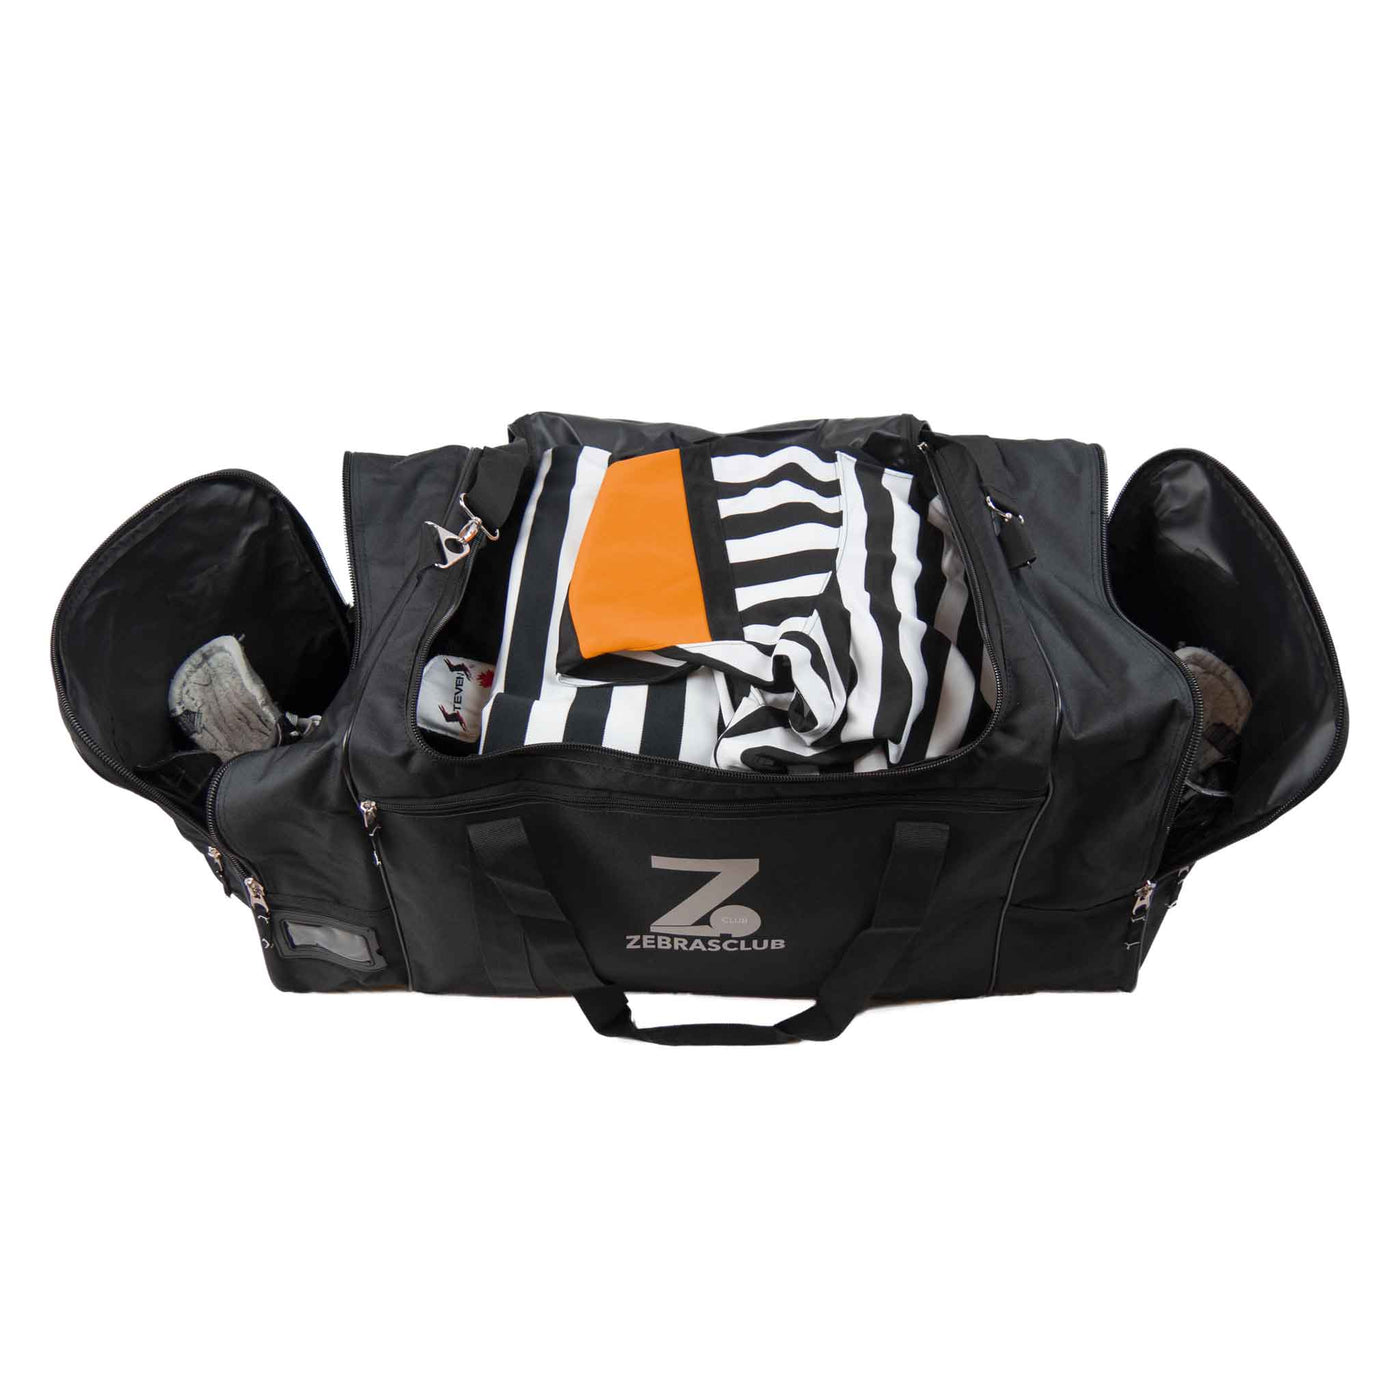 Zebrasclub hockey referee bag equipment